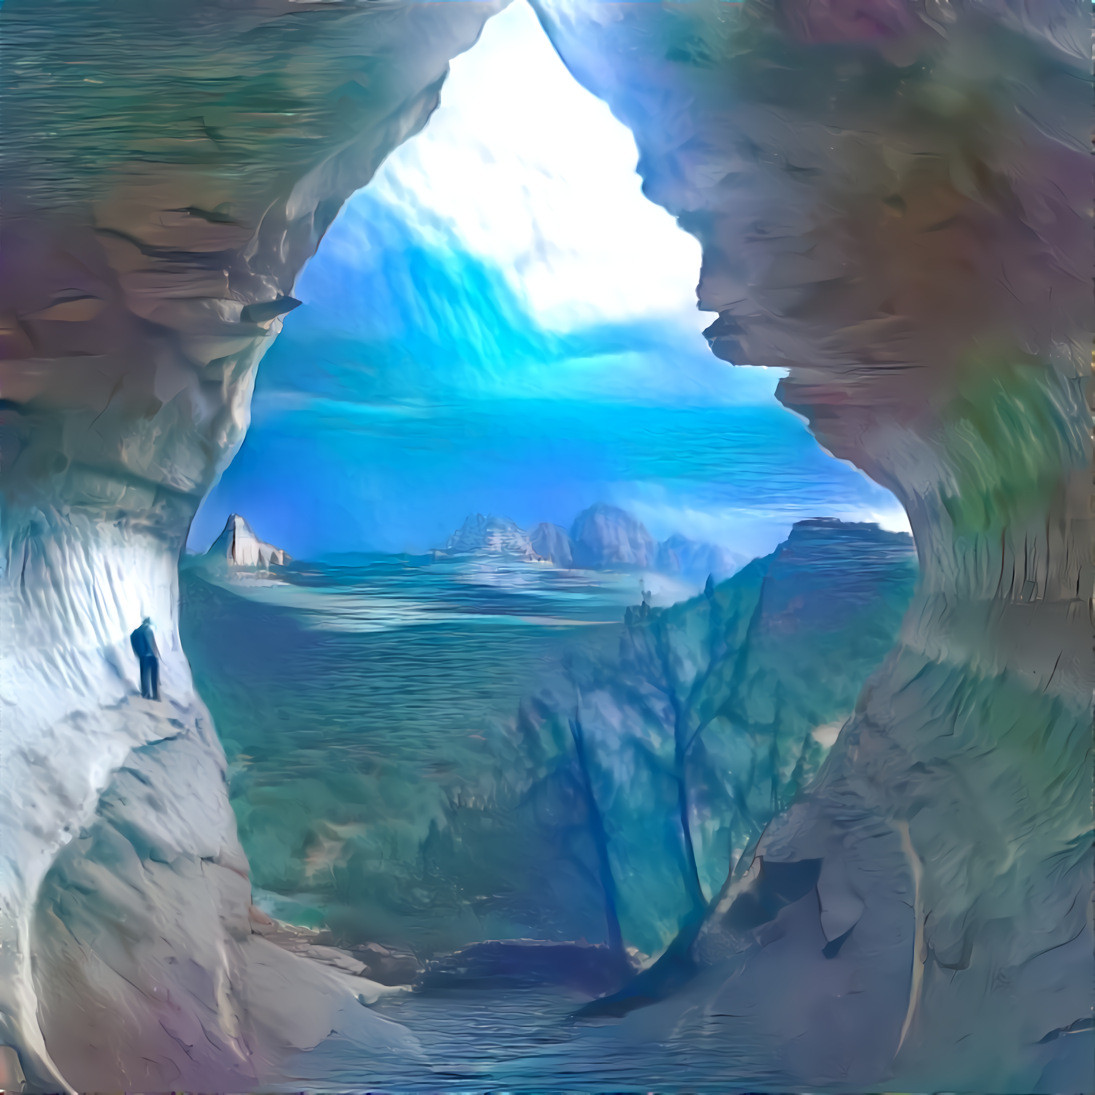 Original photo "Door the the world" taken in Sedona Arizona by Lauren Trench @verylauren - Style photo is "Blue Iceburg" taken in Greenland by Dúlra Photography